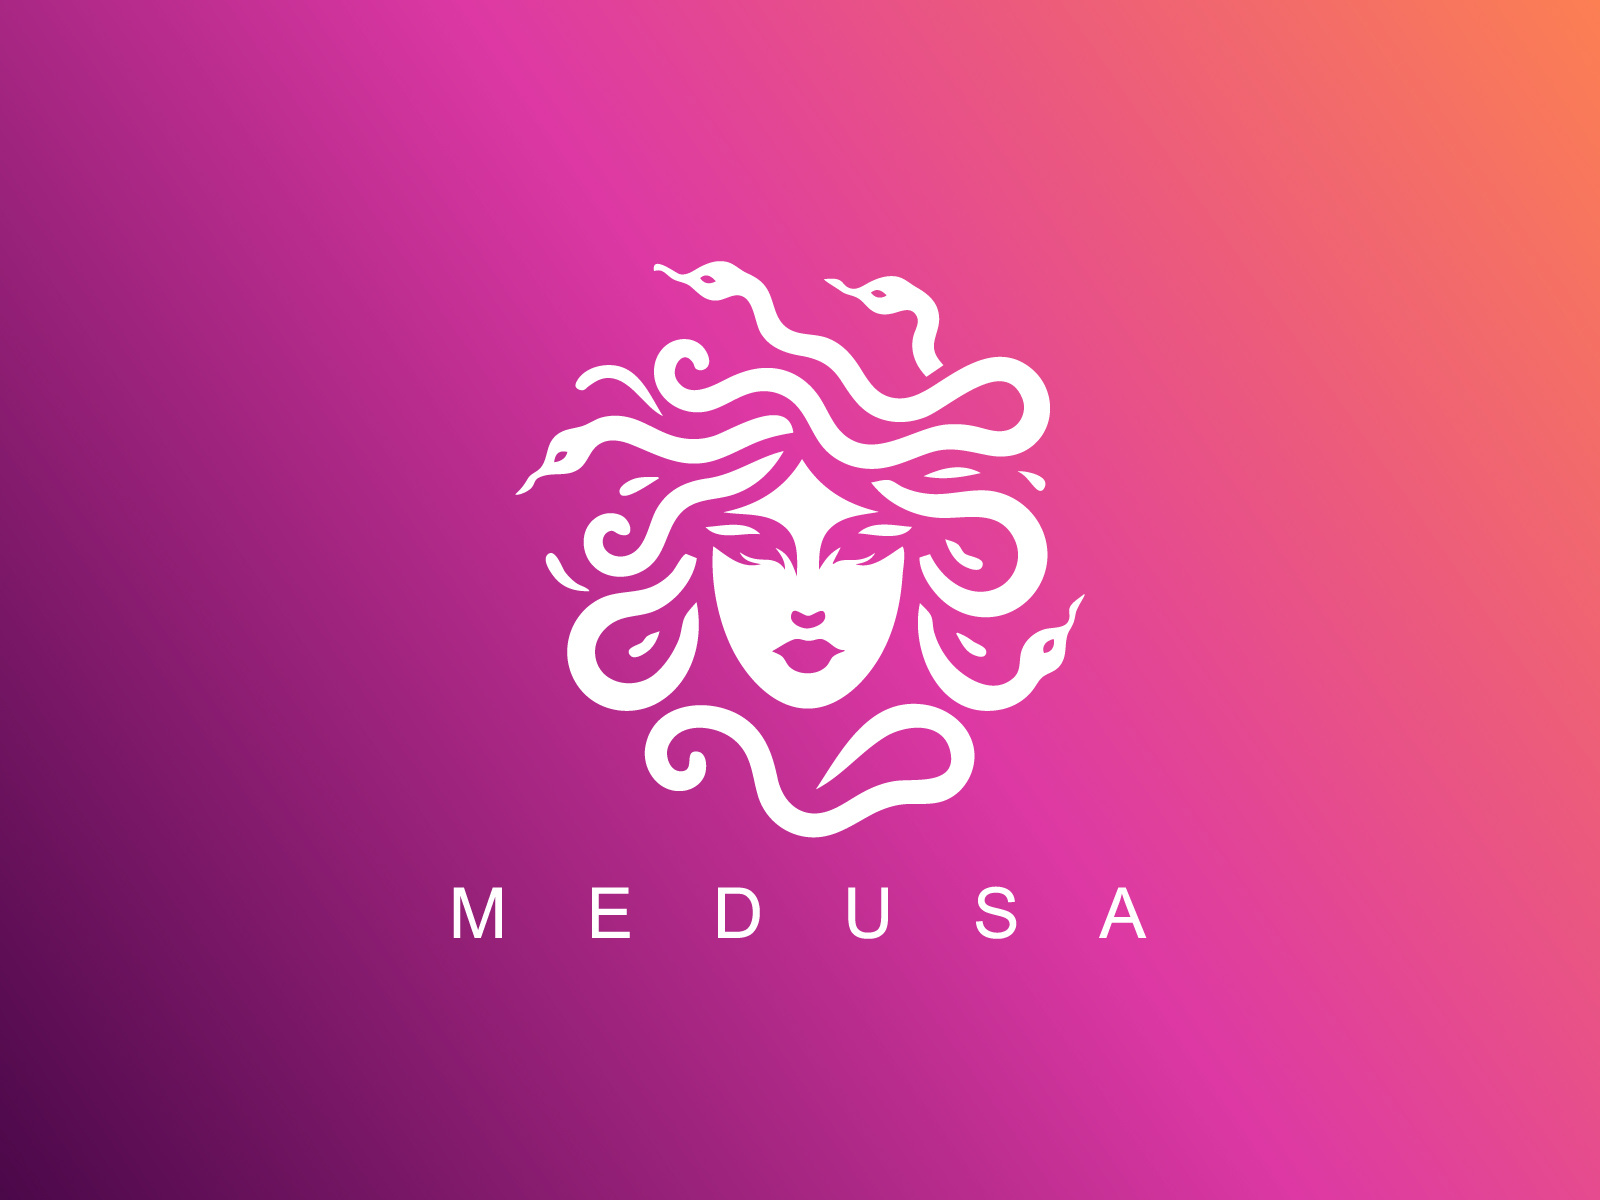 Medusa Logo by Austin Naveed on Dribbble